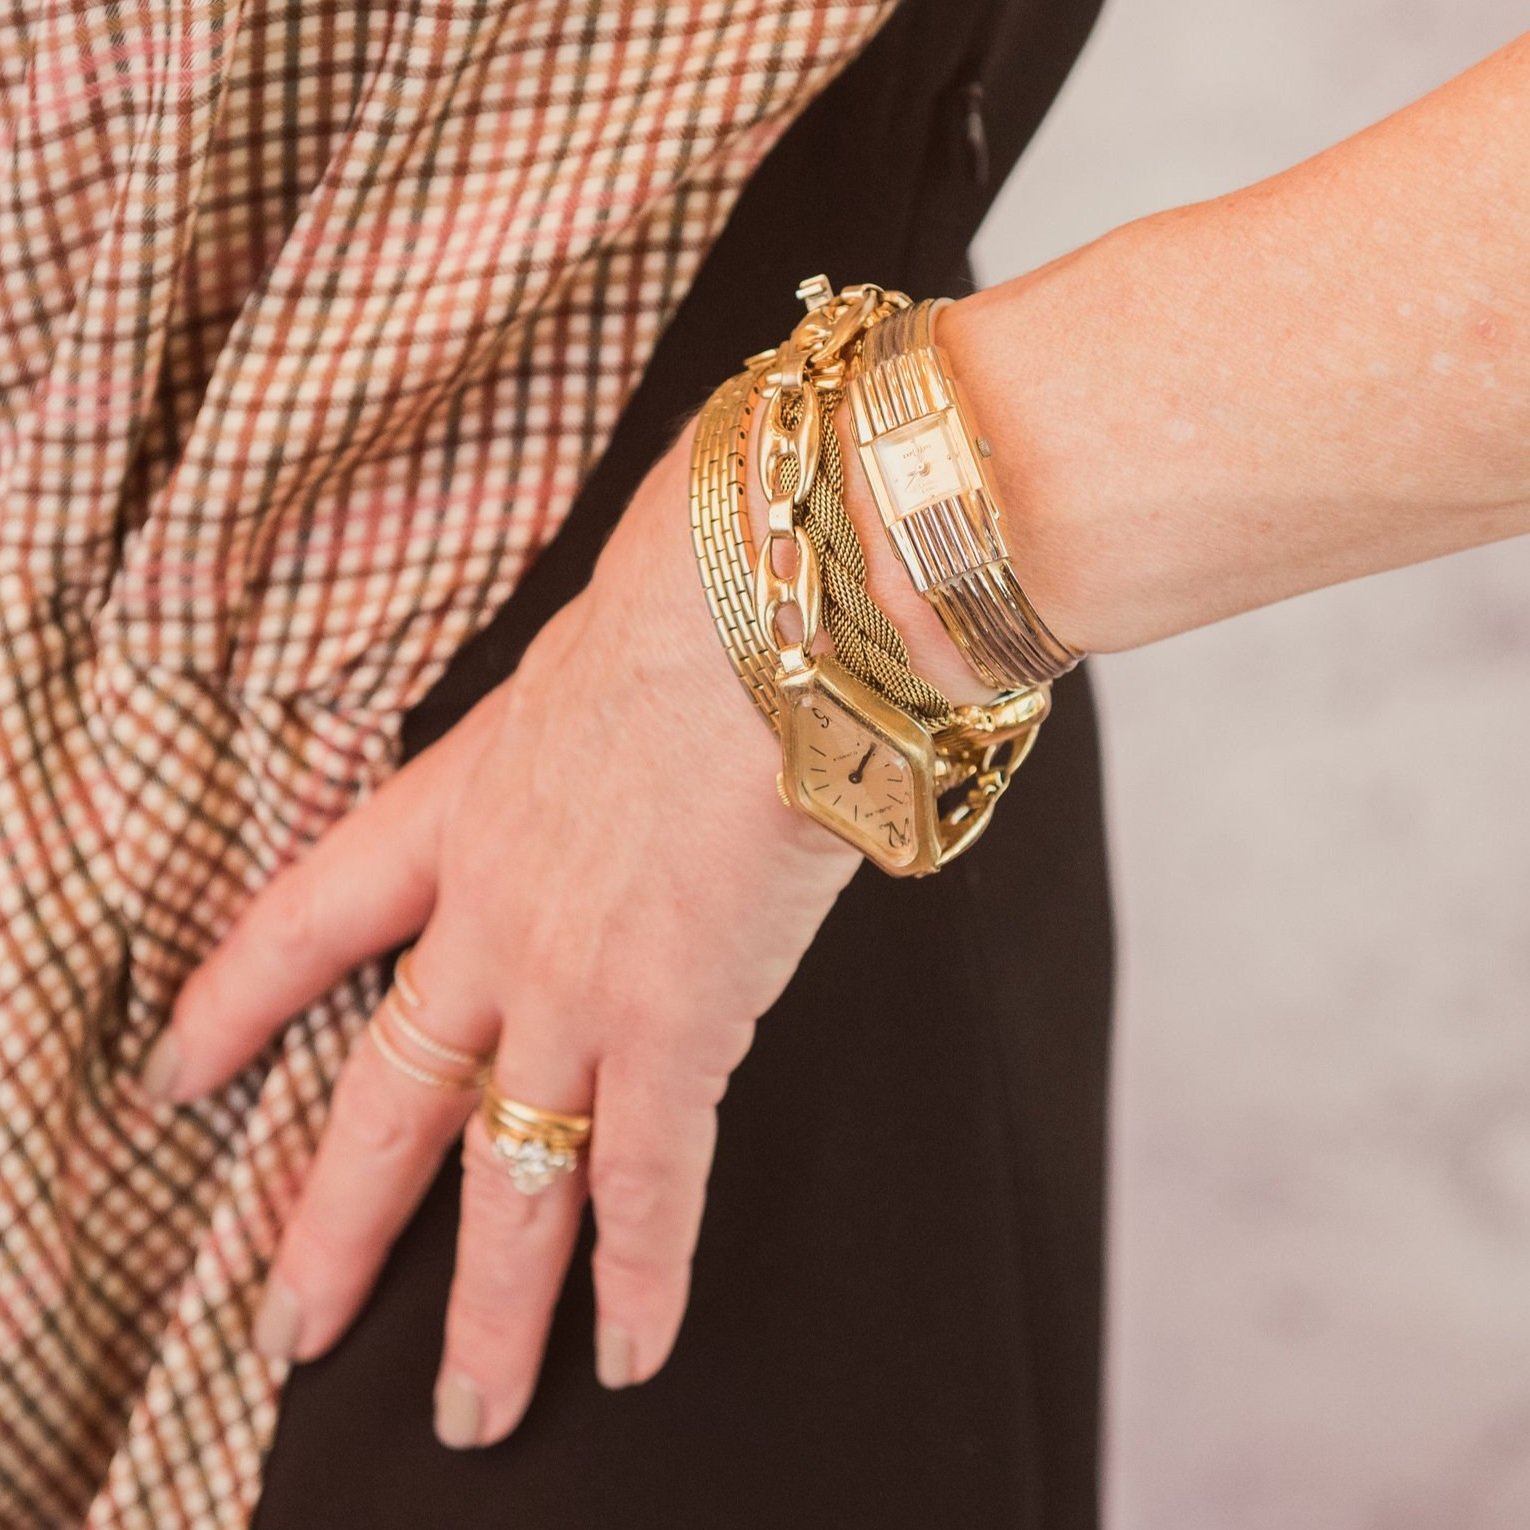 Gold watch and bracelets.